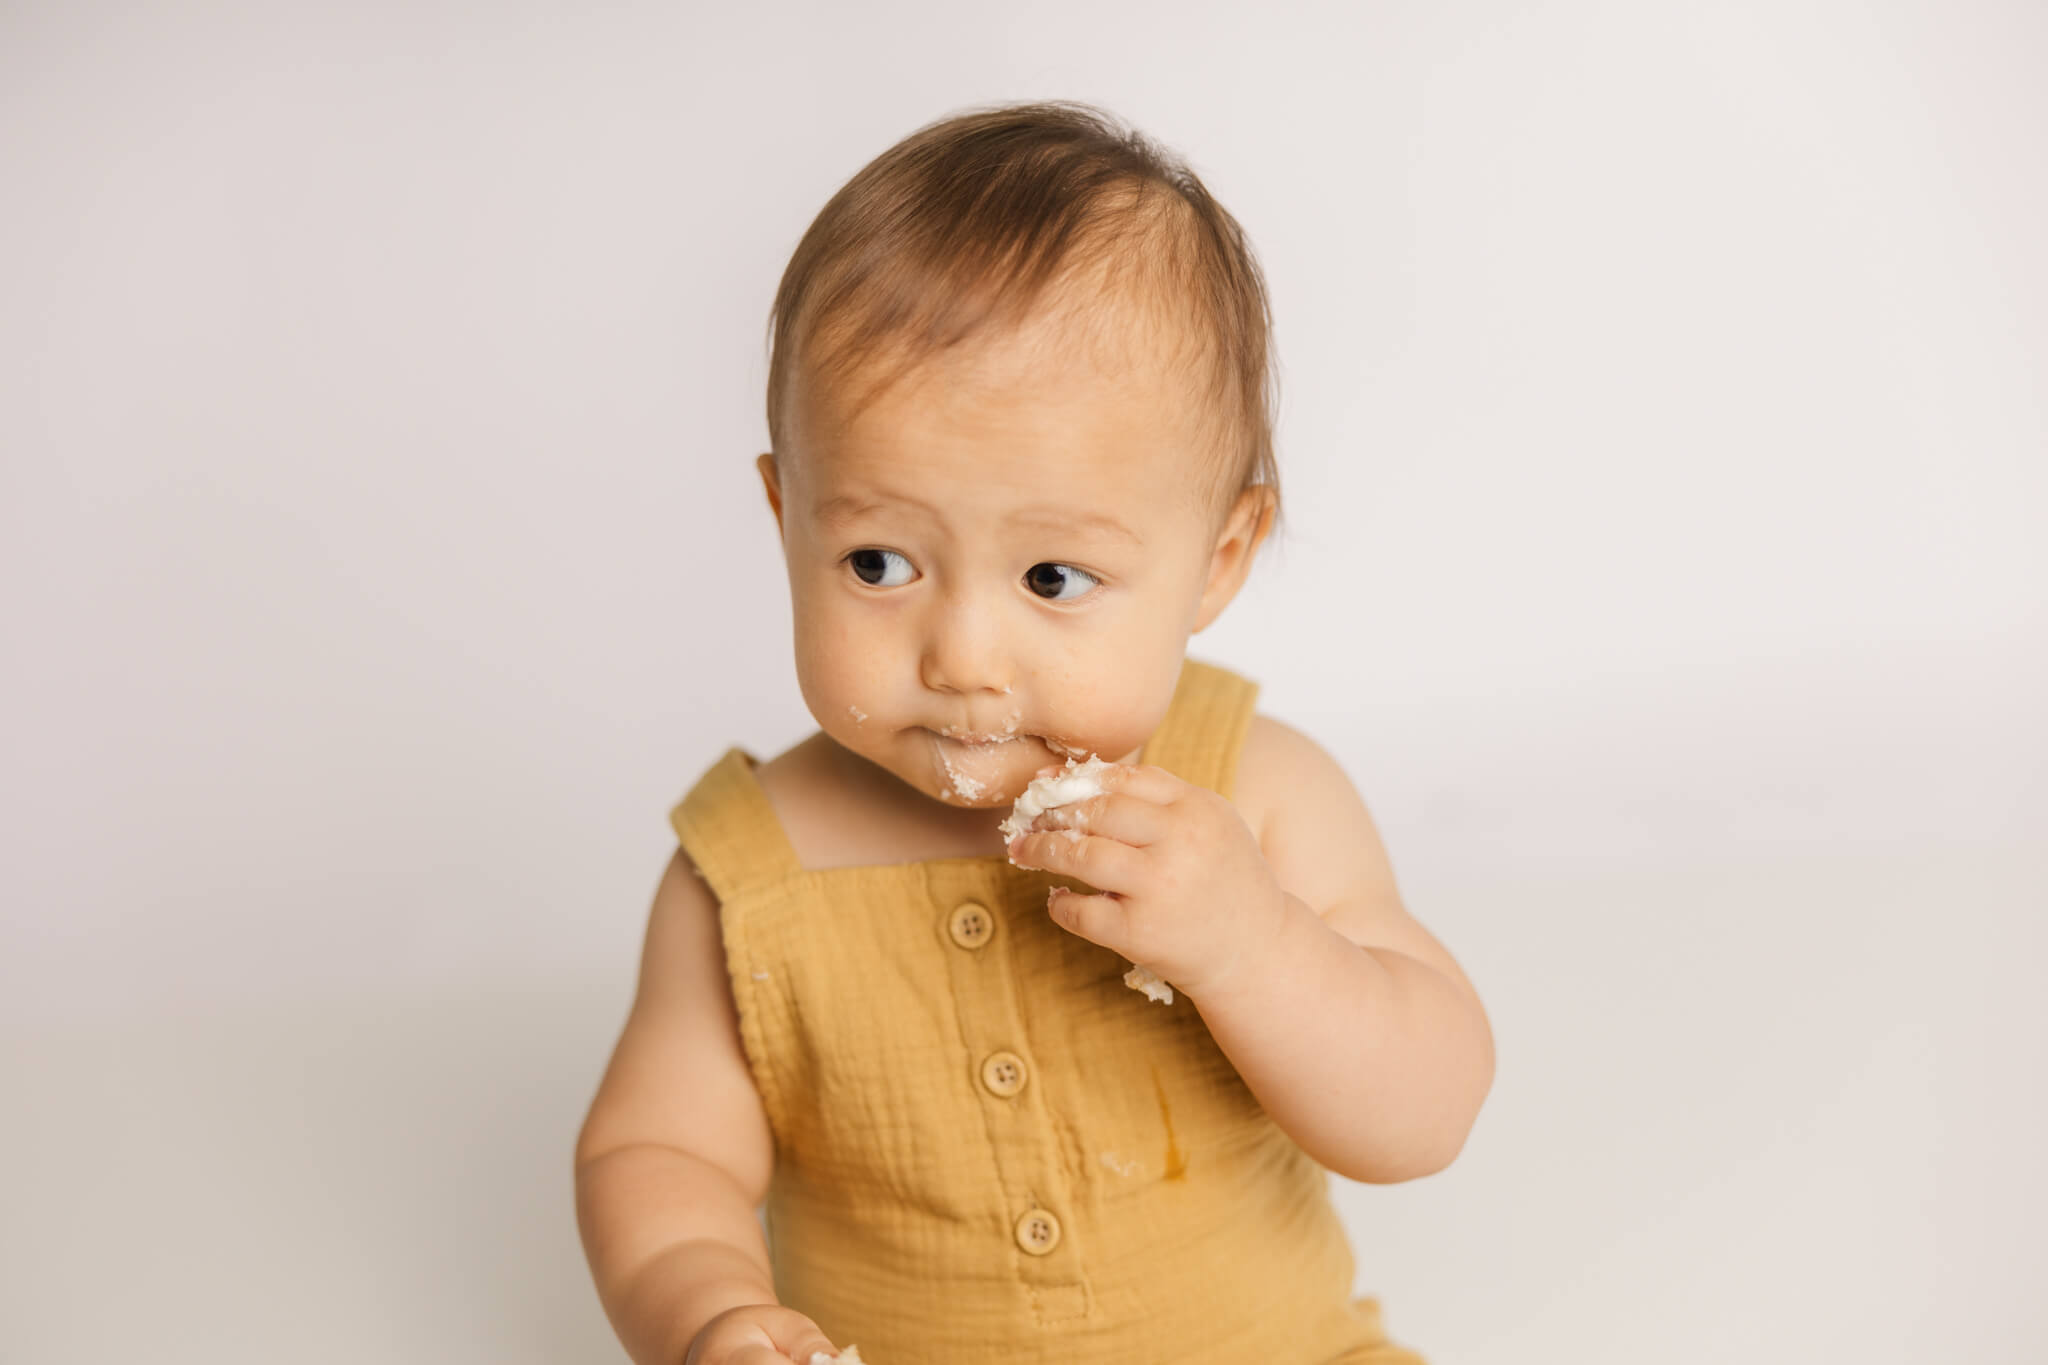 Little boy enjoying a bite of cake during cake smash session.